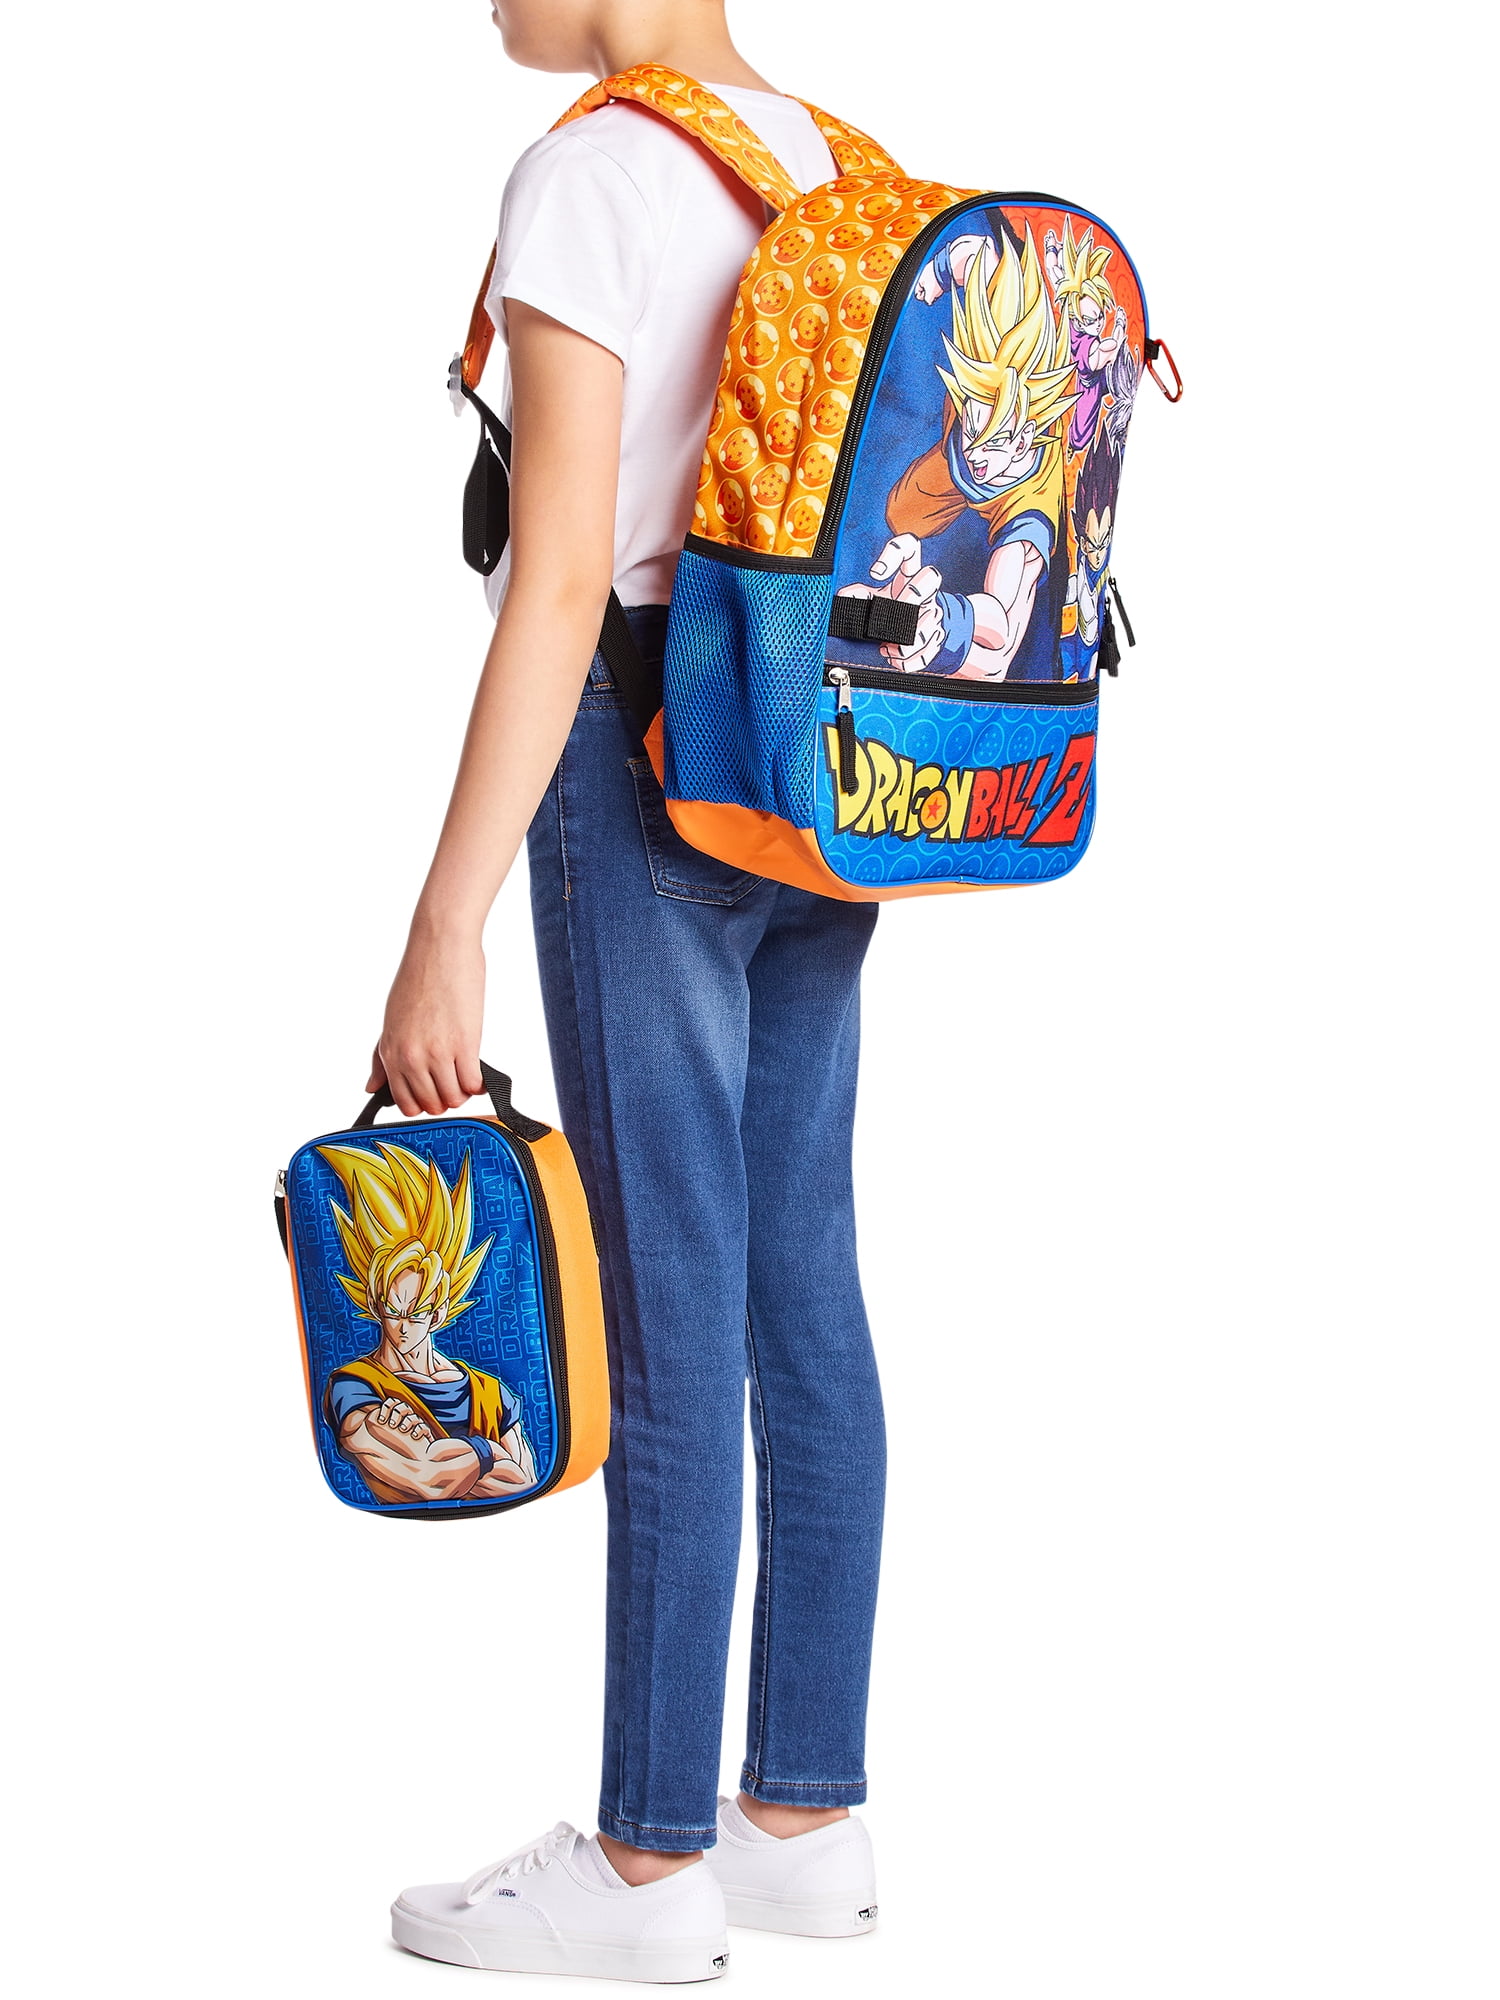 Bzdaisy 15'' Laptop Backpack, Dragon Ball Goku, Parents & Kids Unisex for Kids Teen, Size: 17.32 x 11.42 x 5.51